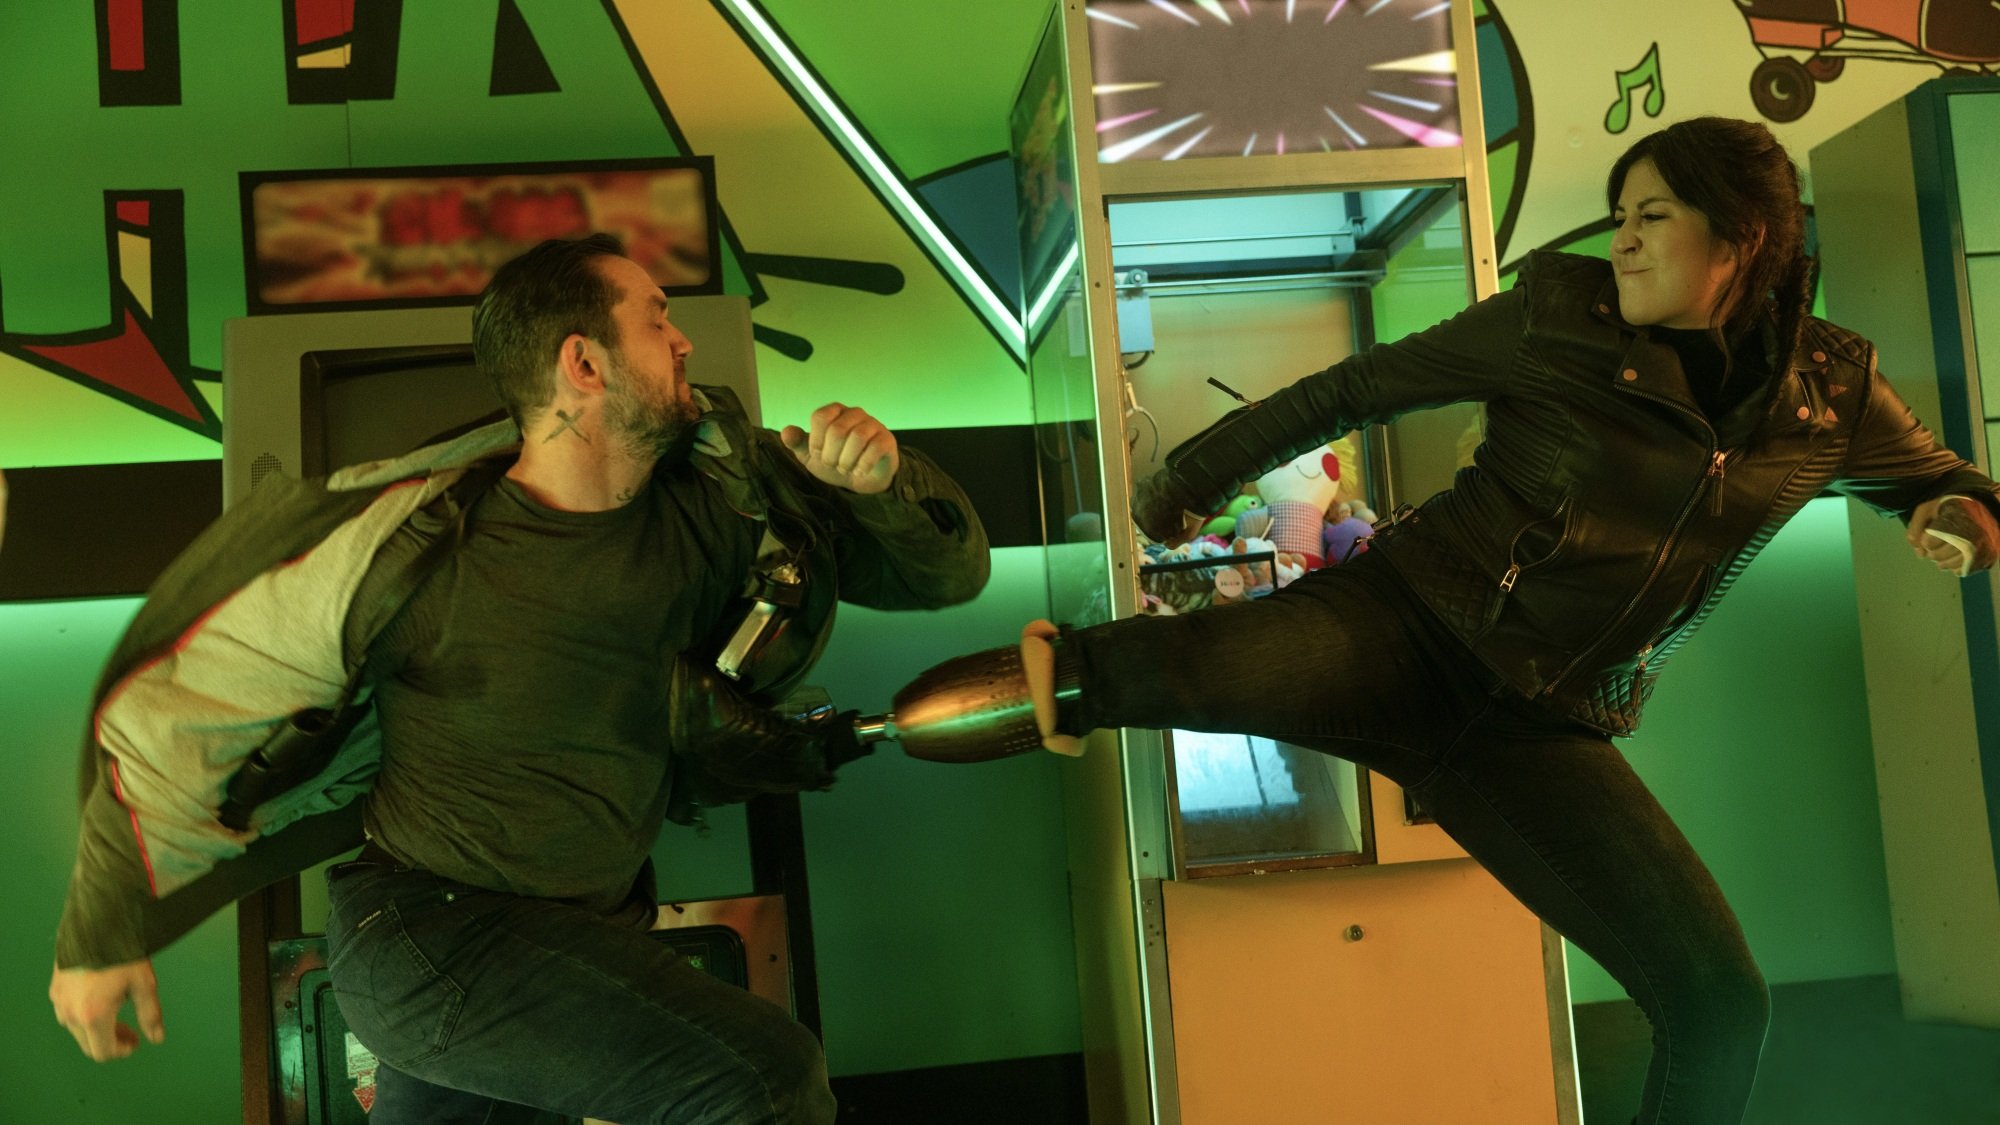 Maya Lopez kicks a man while fighting in an arcade.